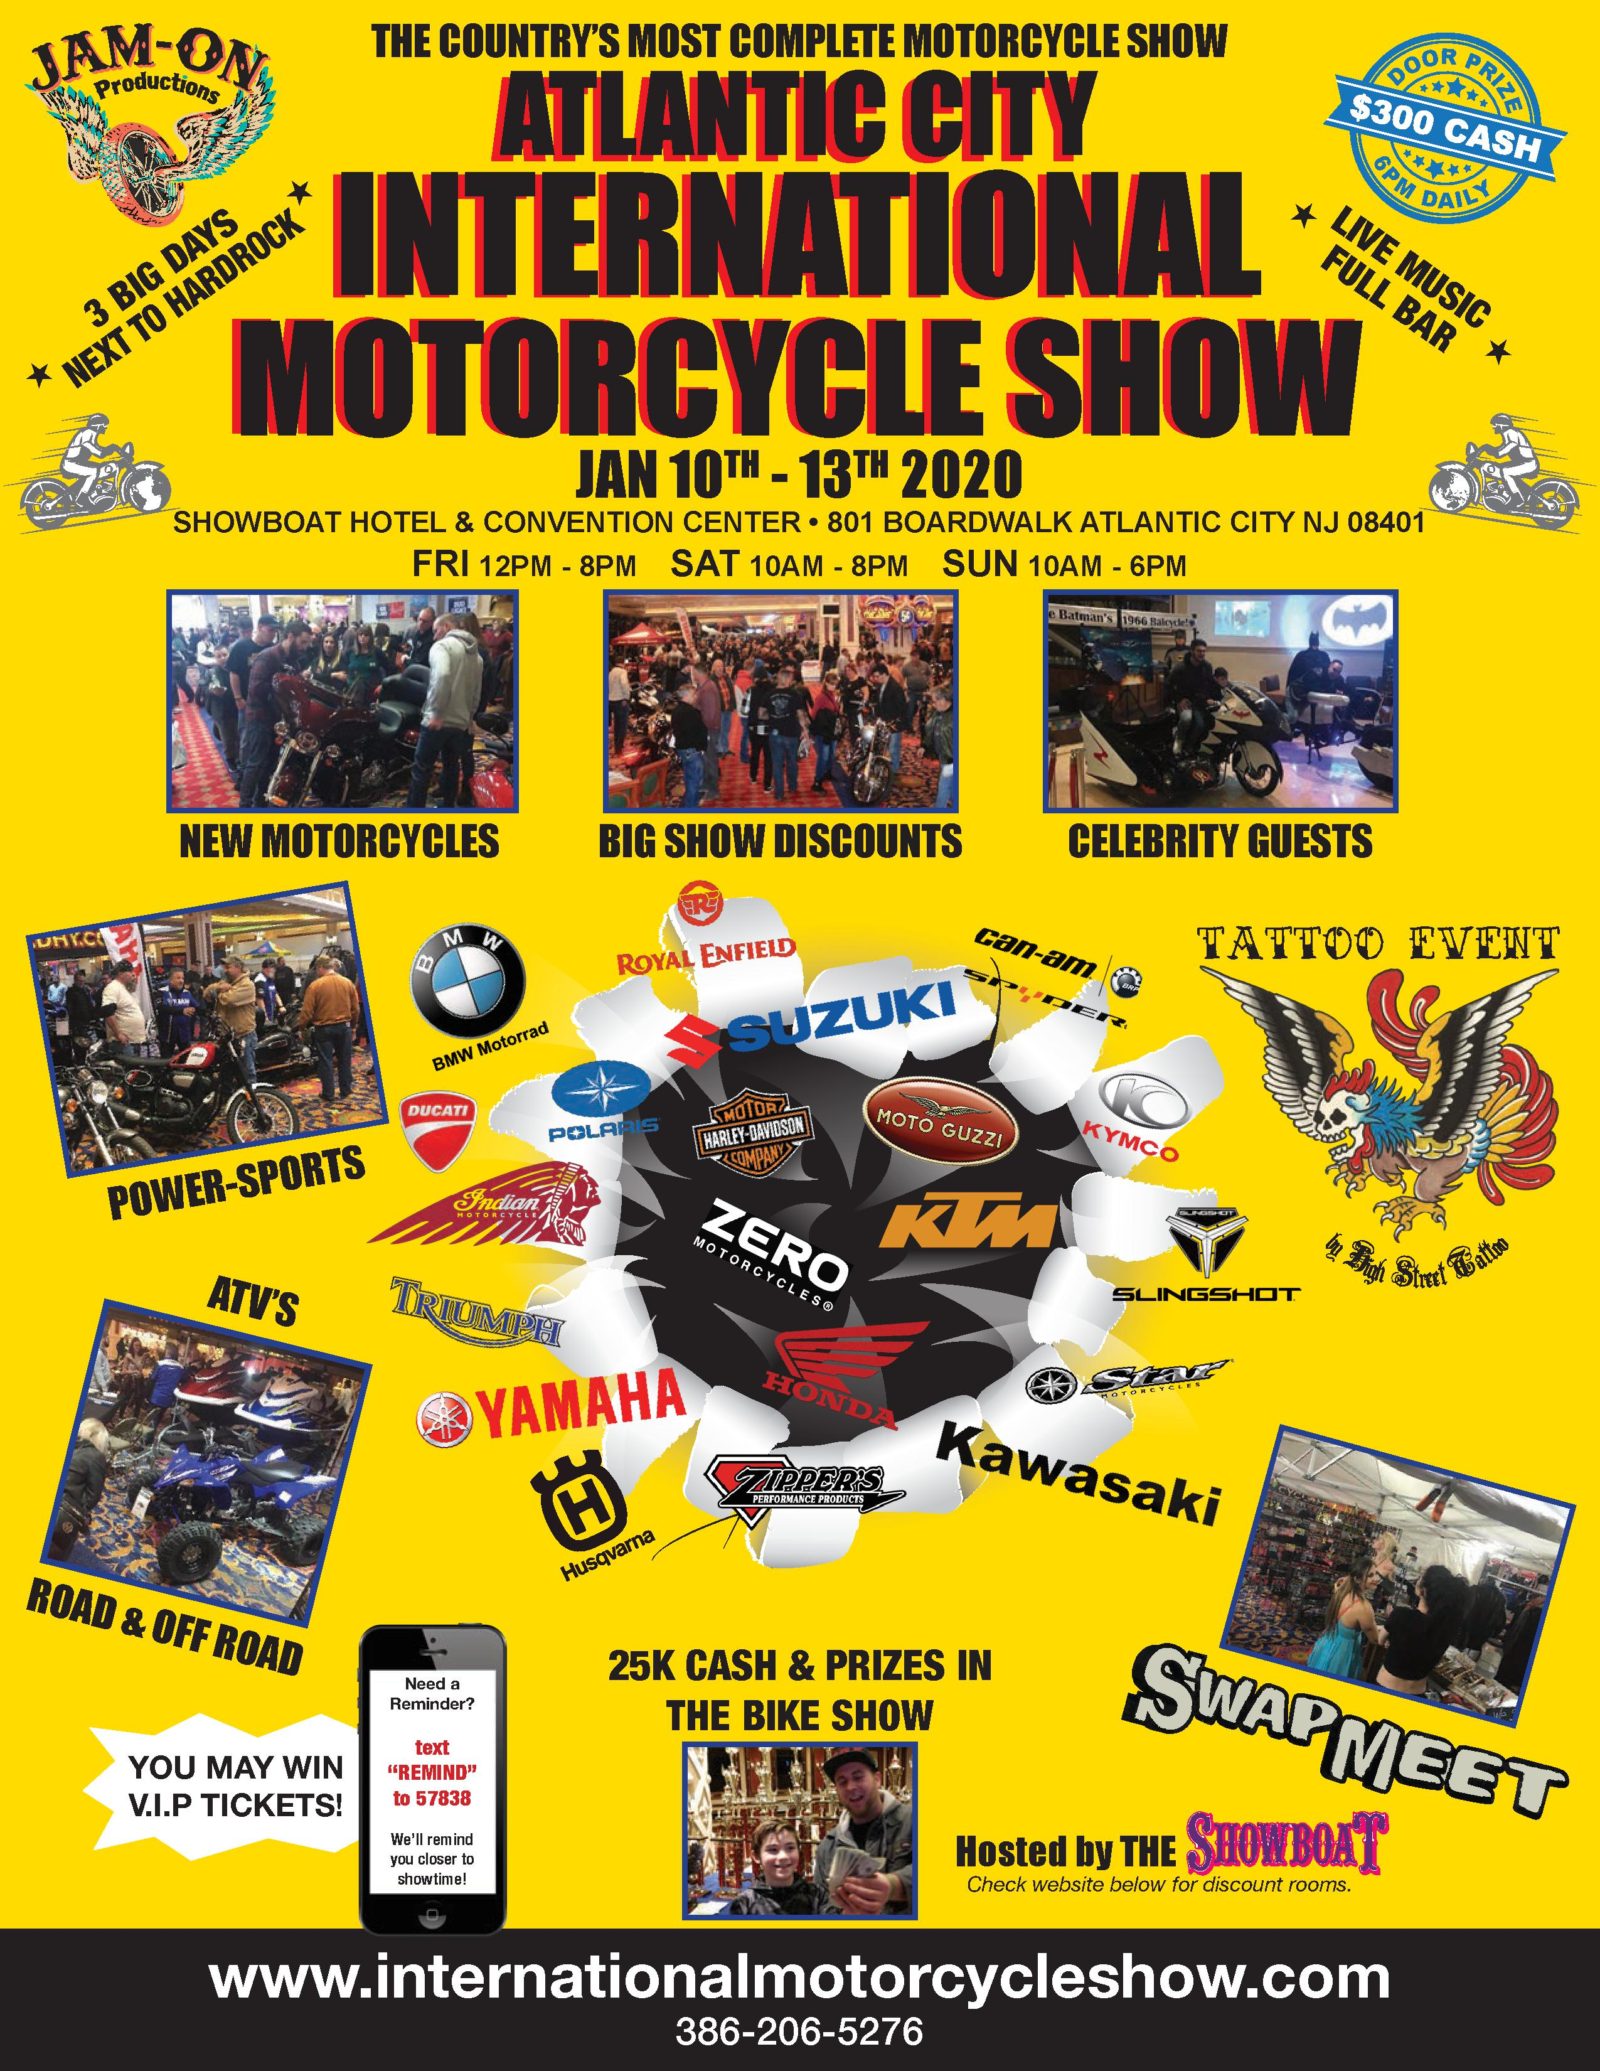 Atlantic City International Motorcycle Show 2020 | LightningCustoms.com